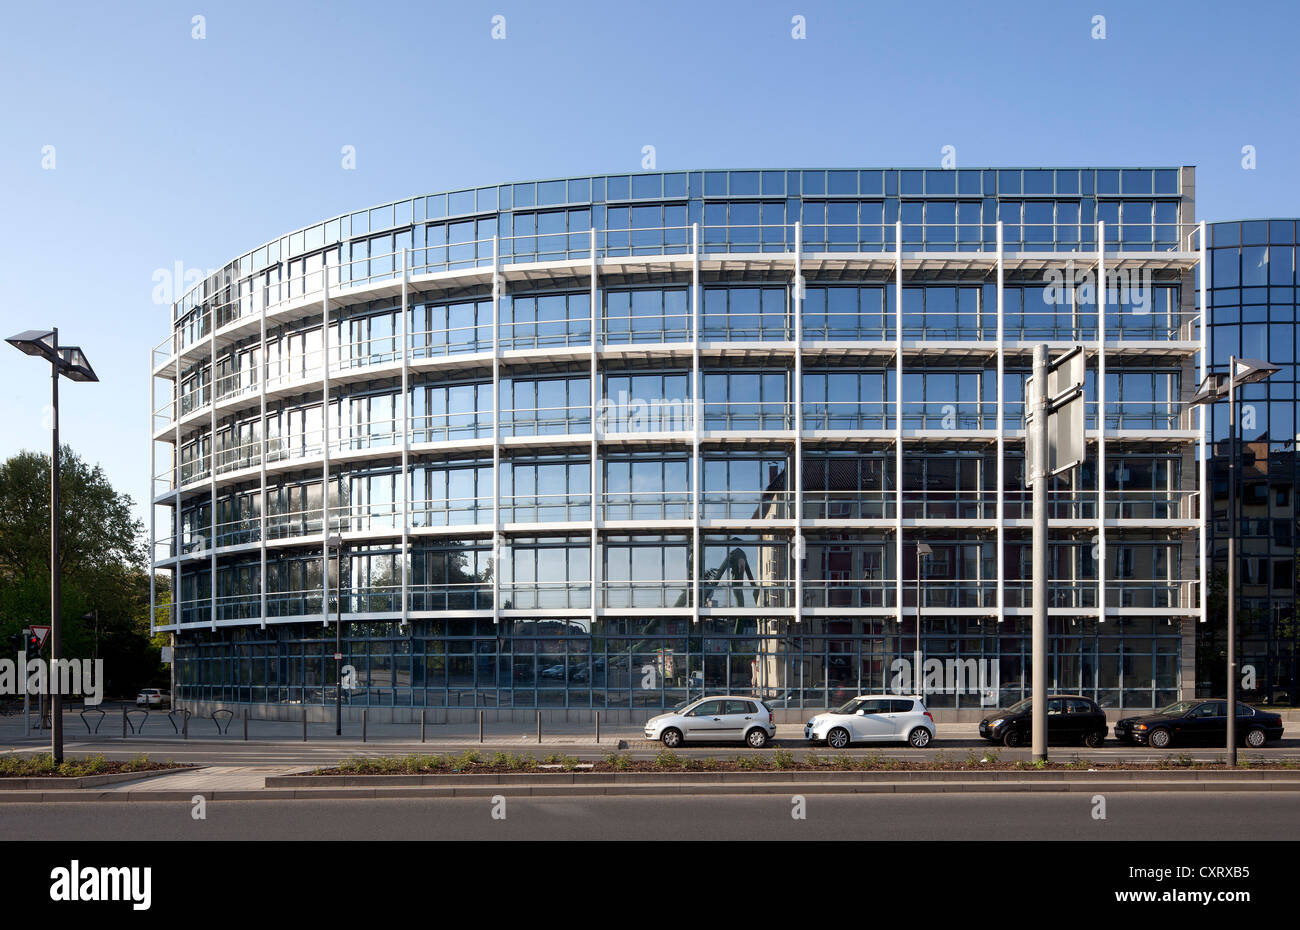 Immeuble de bureaux sur Oskar-von-Miller-Strasse, Frankfurt am Main, Hesse, PublicGround Banque D'Images